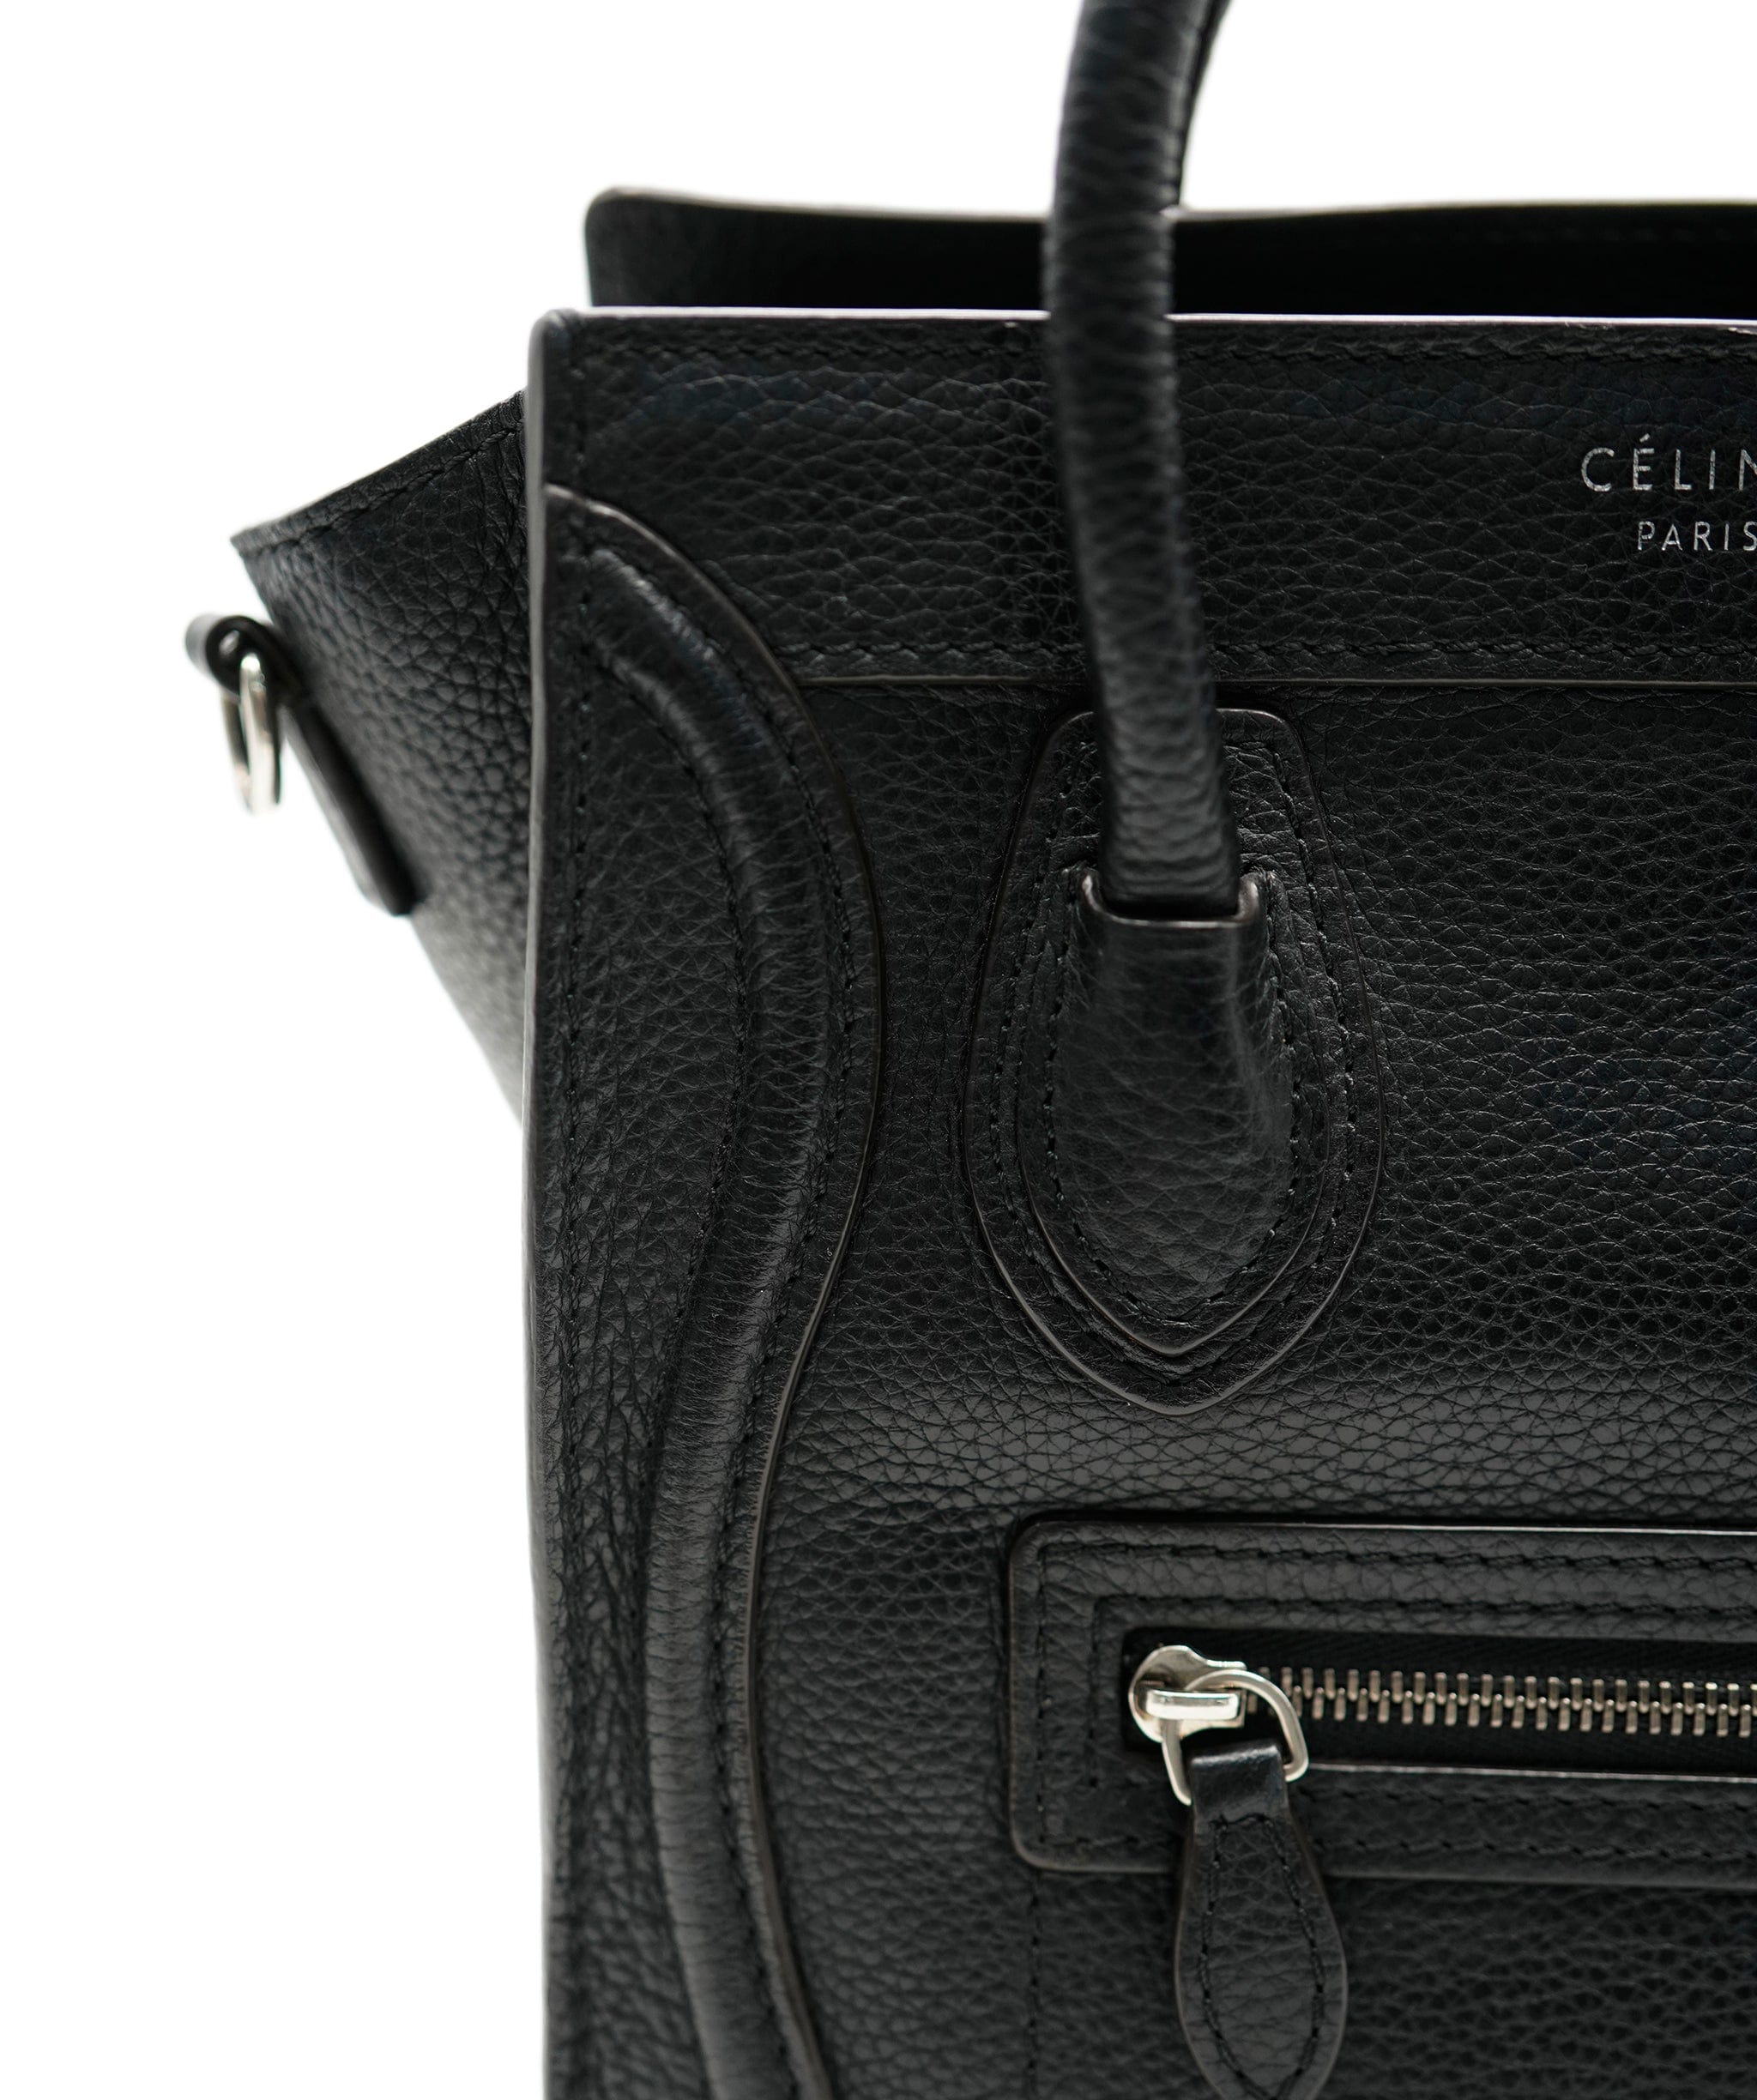 Celine Celine Black Drummed Leather Nano Luggage ABC0531